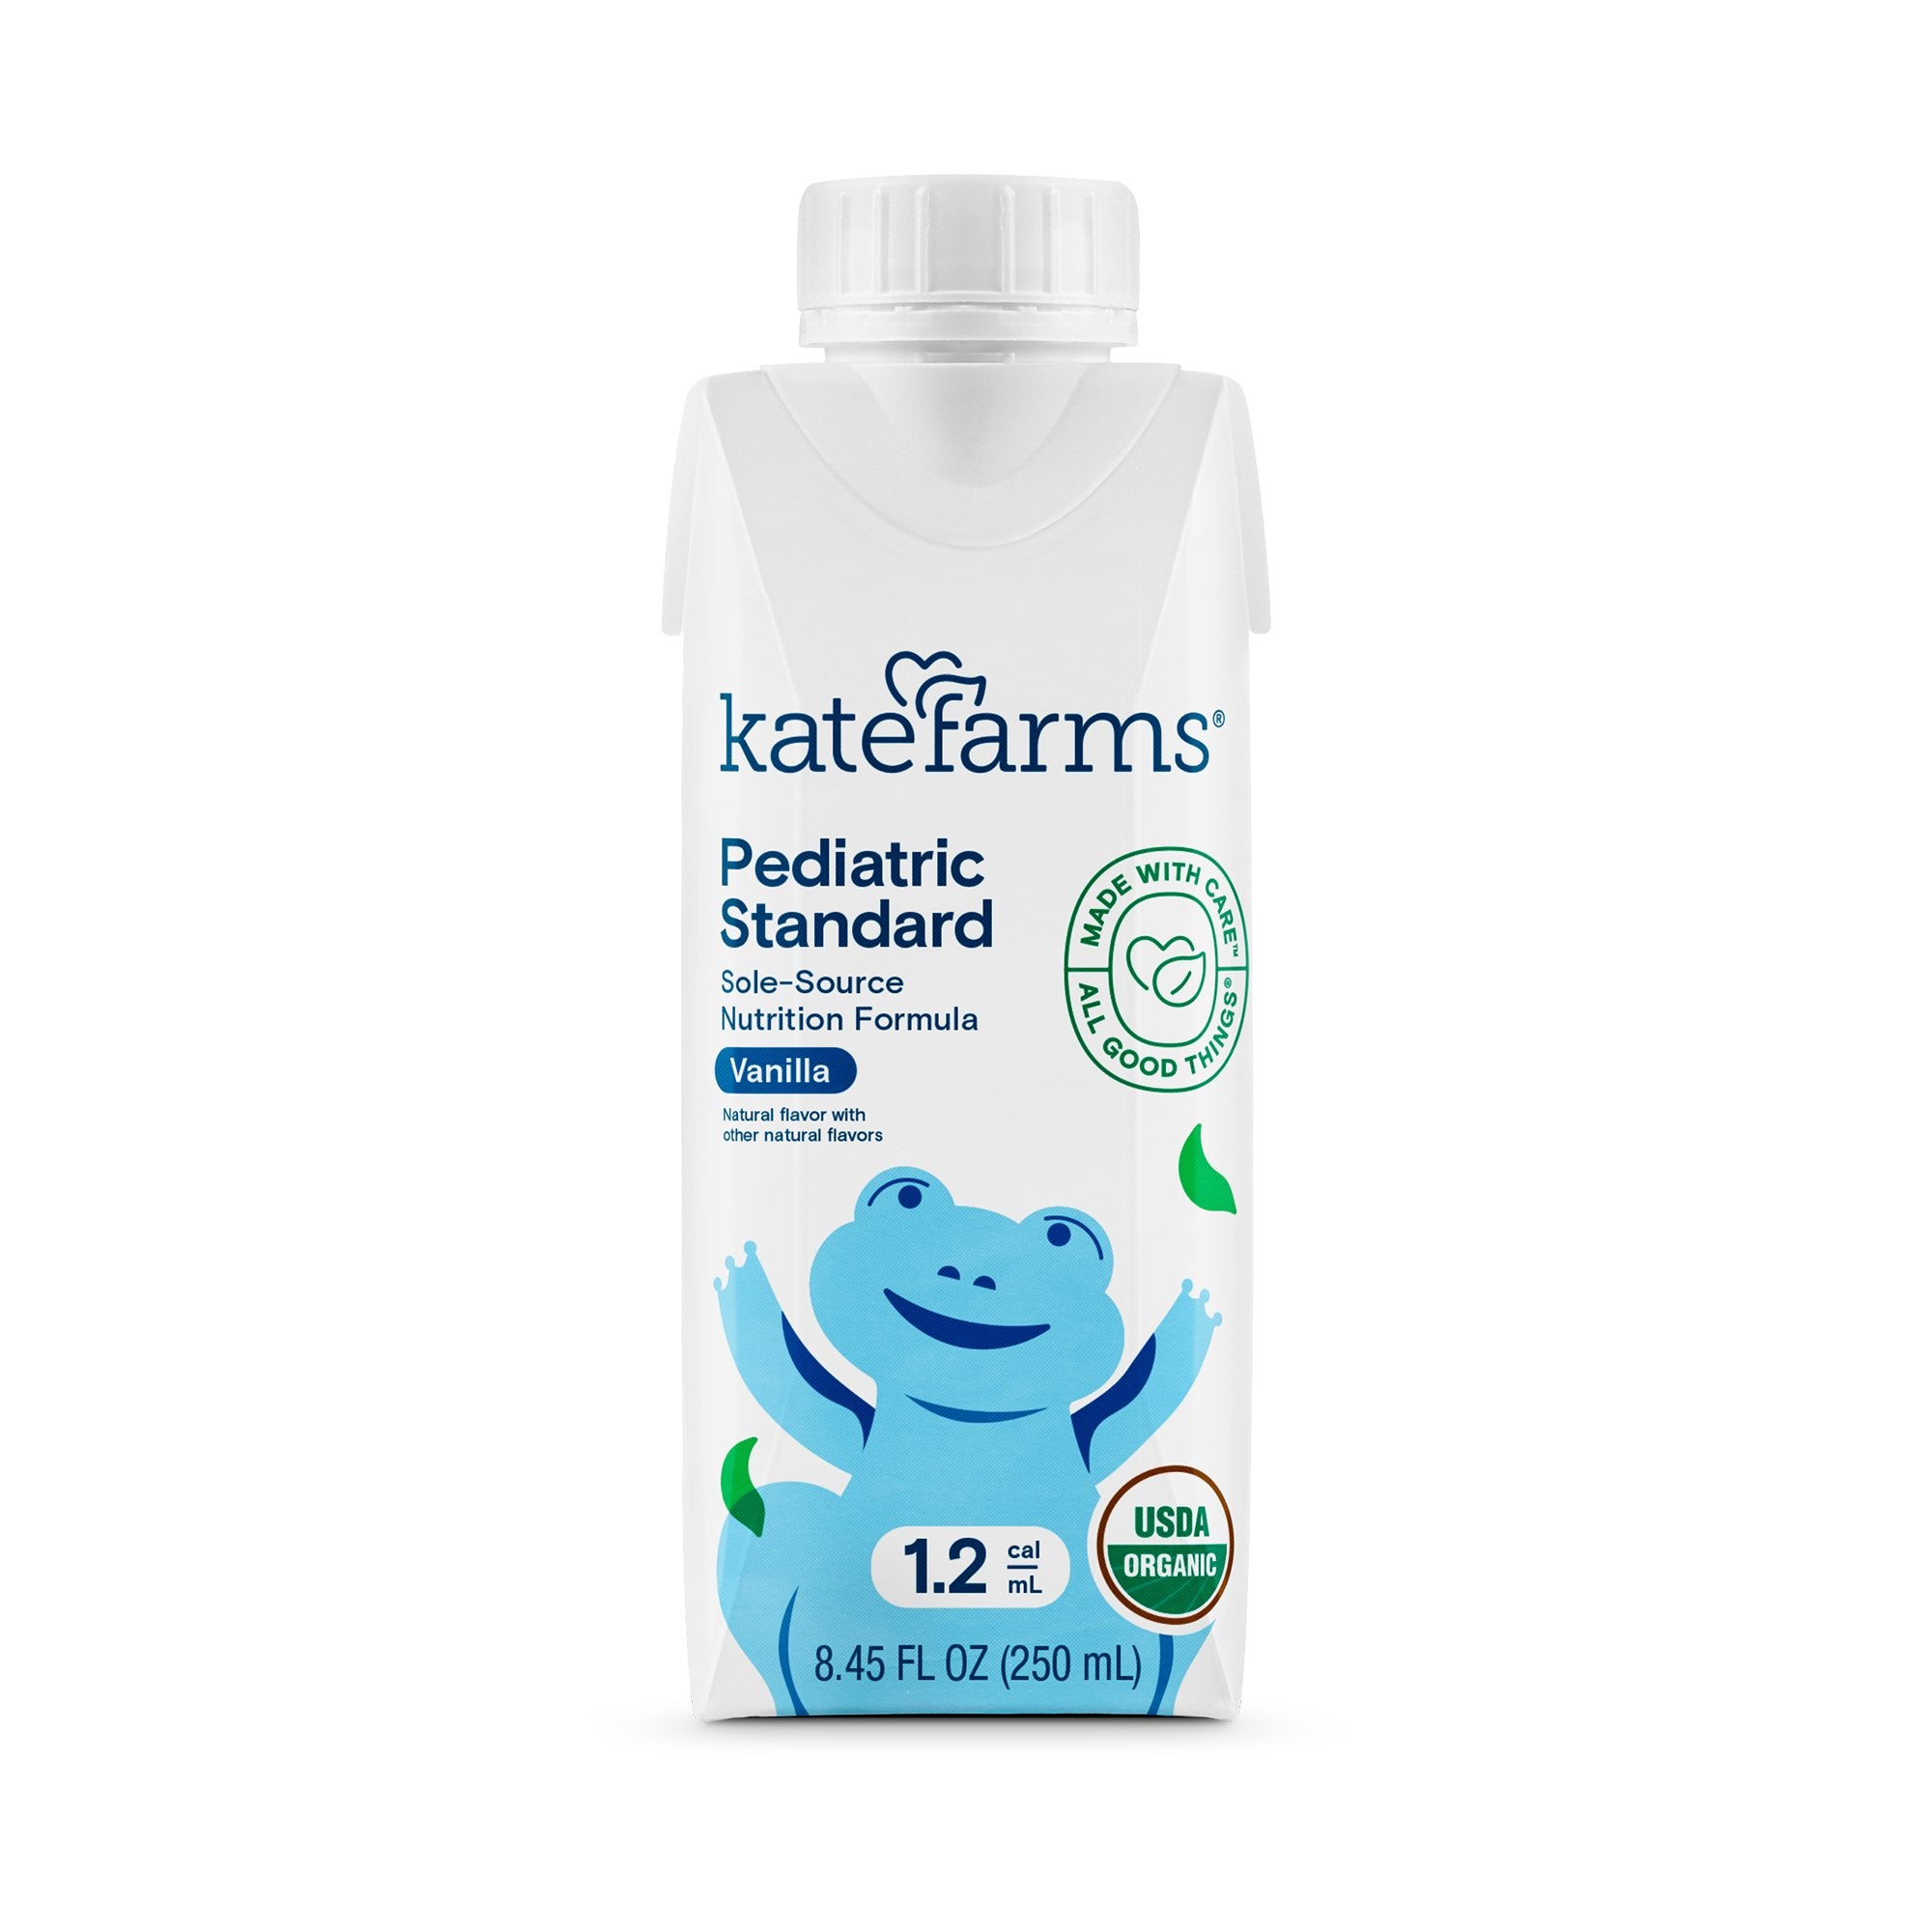 Kate Farms® Pediatric Standard 1.2 Sole-Source Nutrition Formula, Vanilla Flavor, 8.45-ounce carton